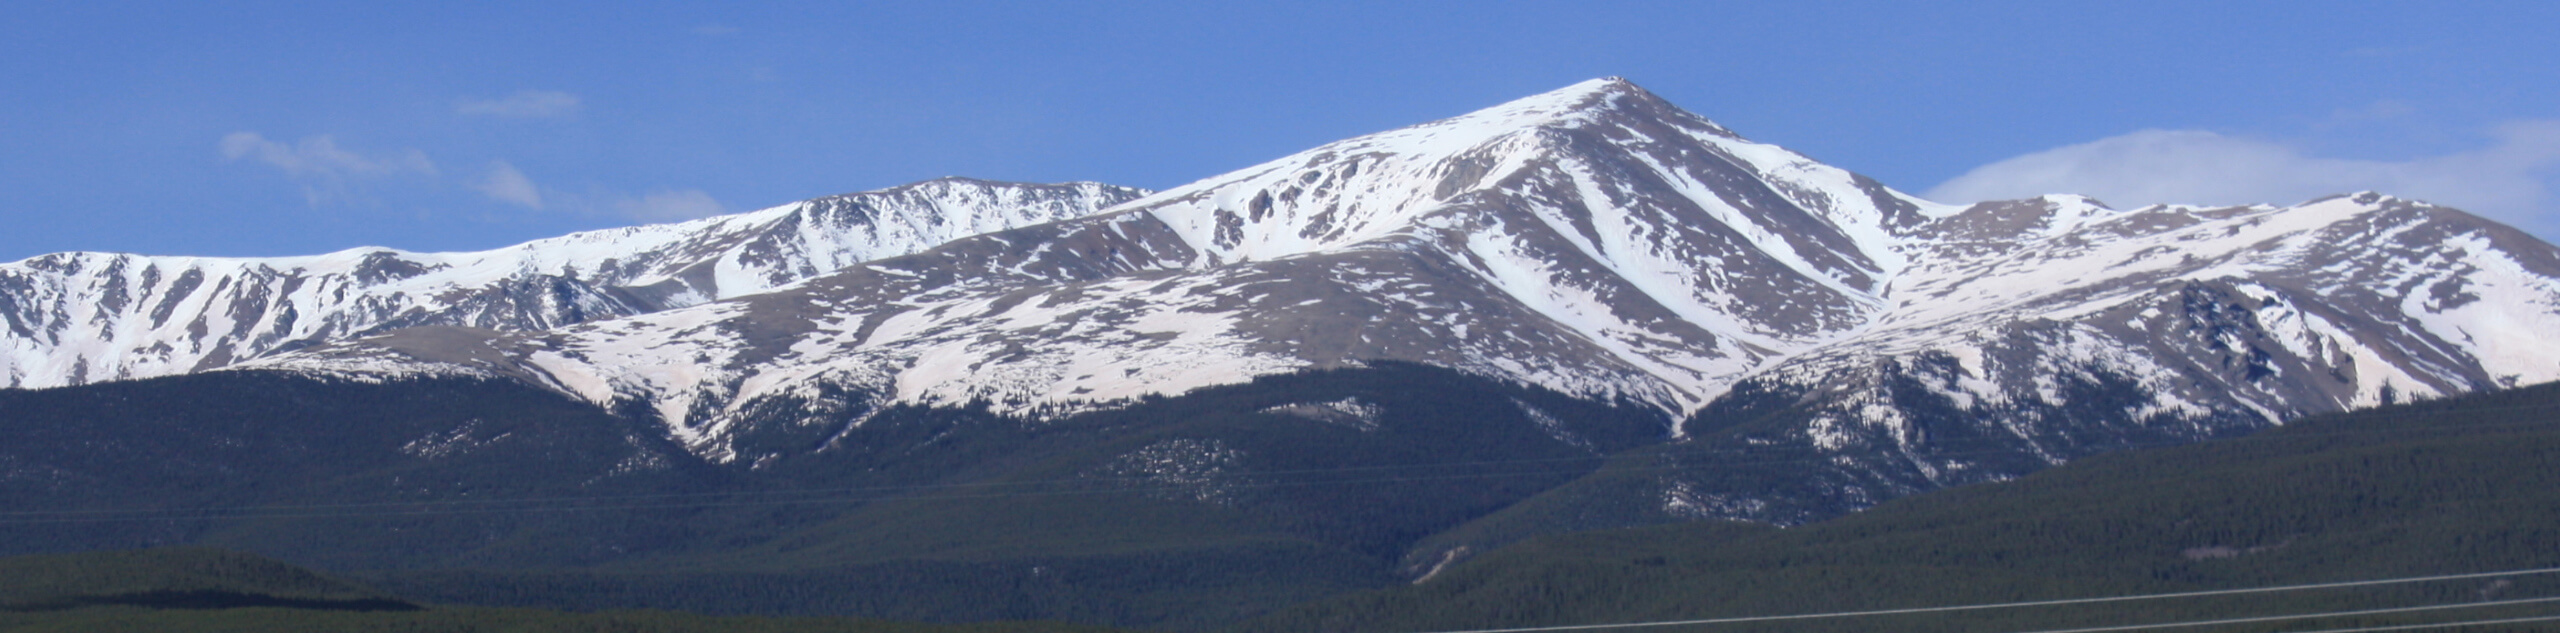 Mount Elbert East Ridge Trail